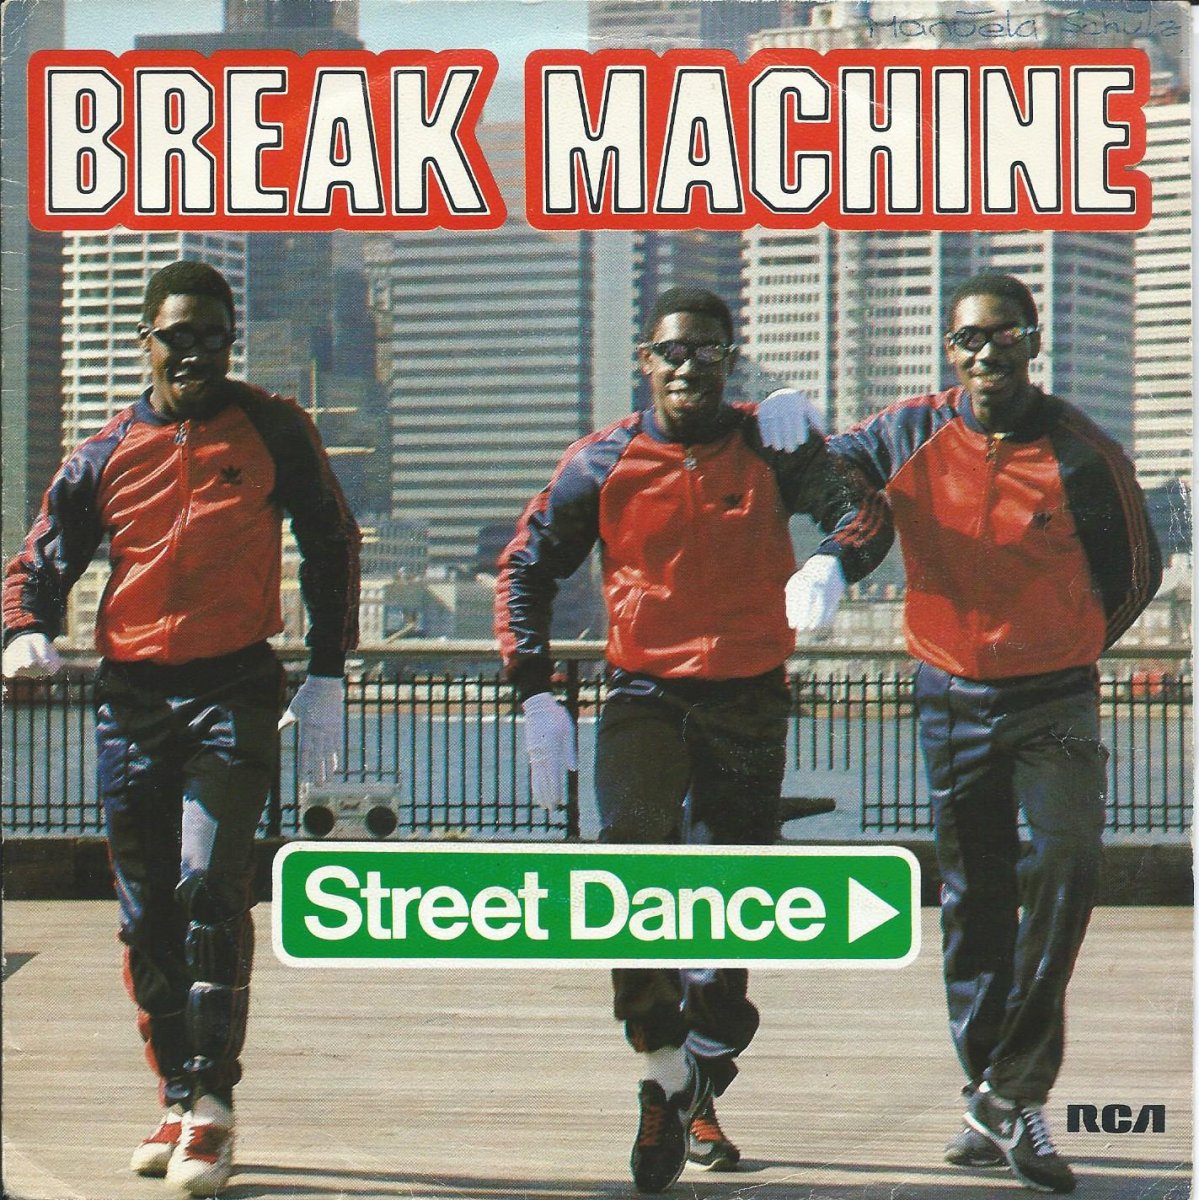 BREAK MACHINE ‎/ STREET DANCE (7